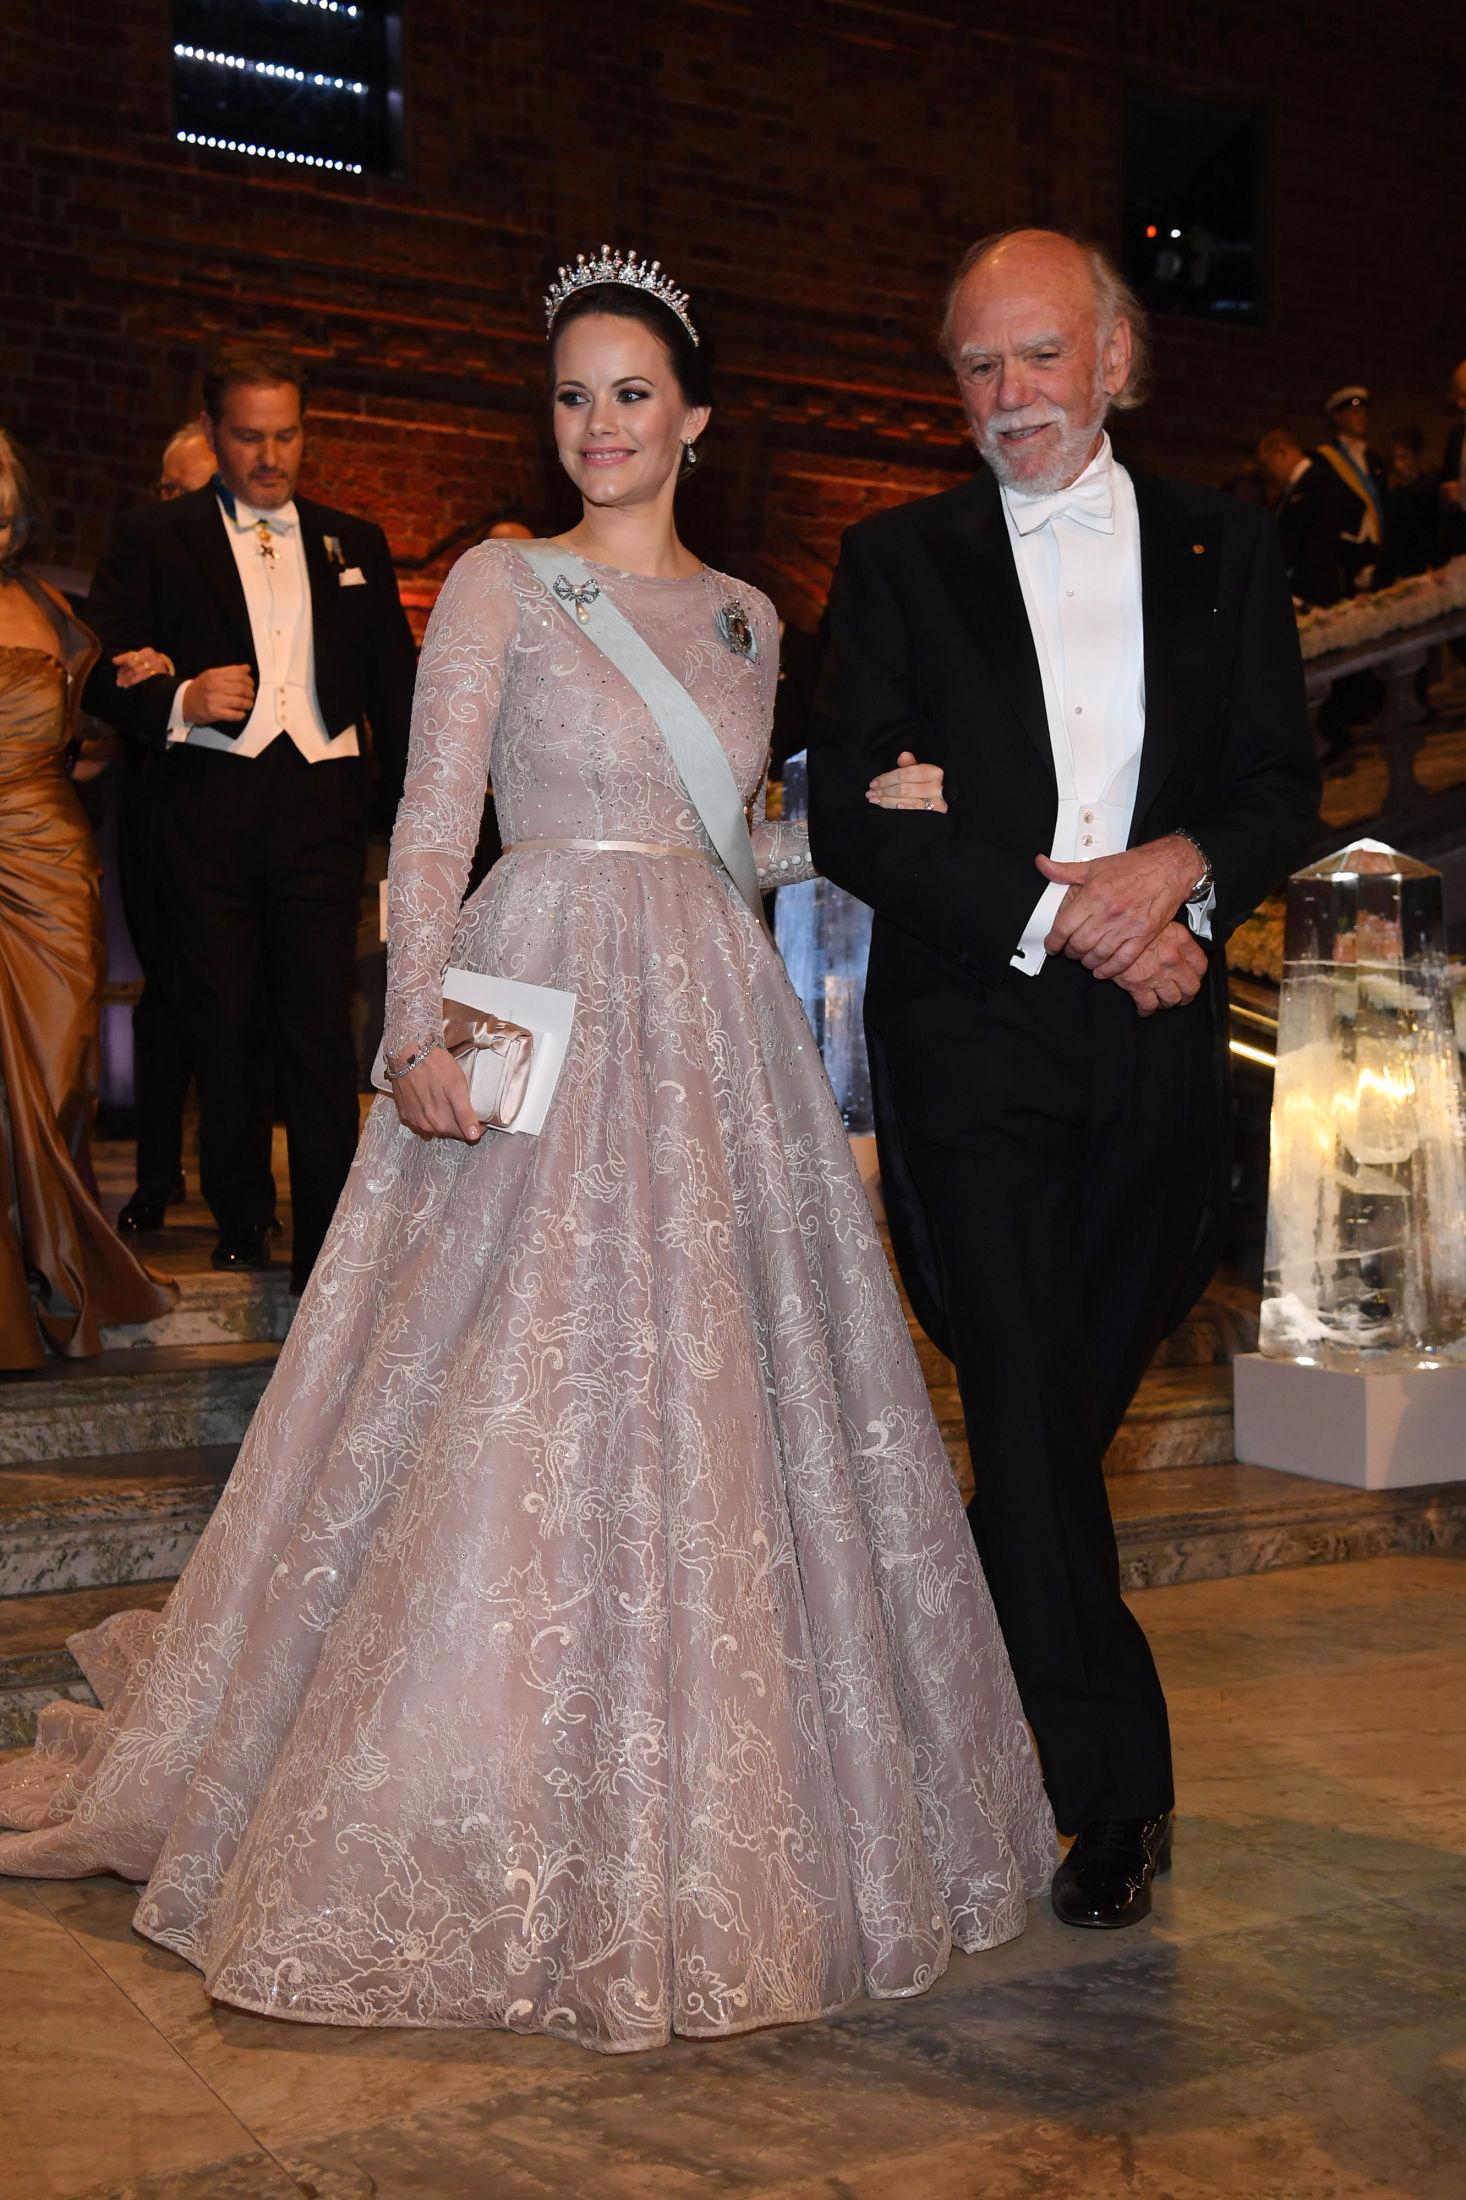 I SVENSK DESIGN: Prinsesse Sofia kom til banketten ikledd en pudderfarget kjole med langt slep. Hun bar også sitt private diadem, som for anledningen var montert med perler. Foto: GETTY IMAGES.